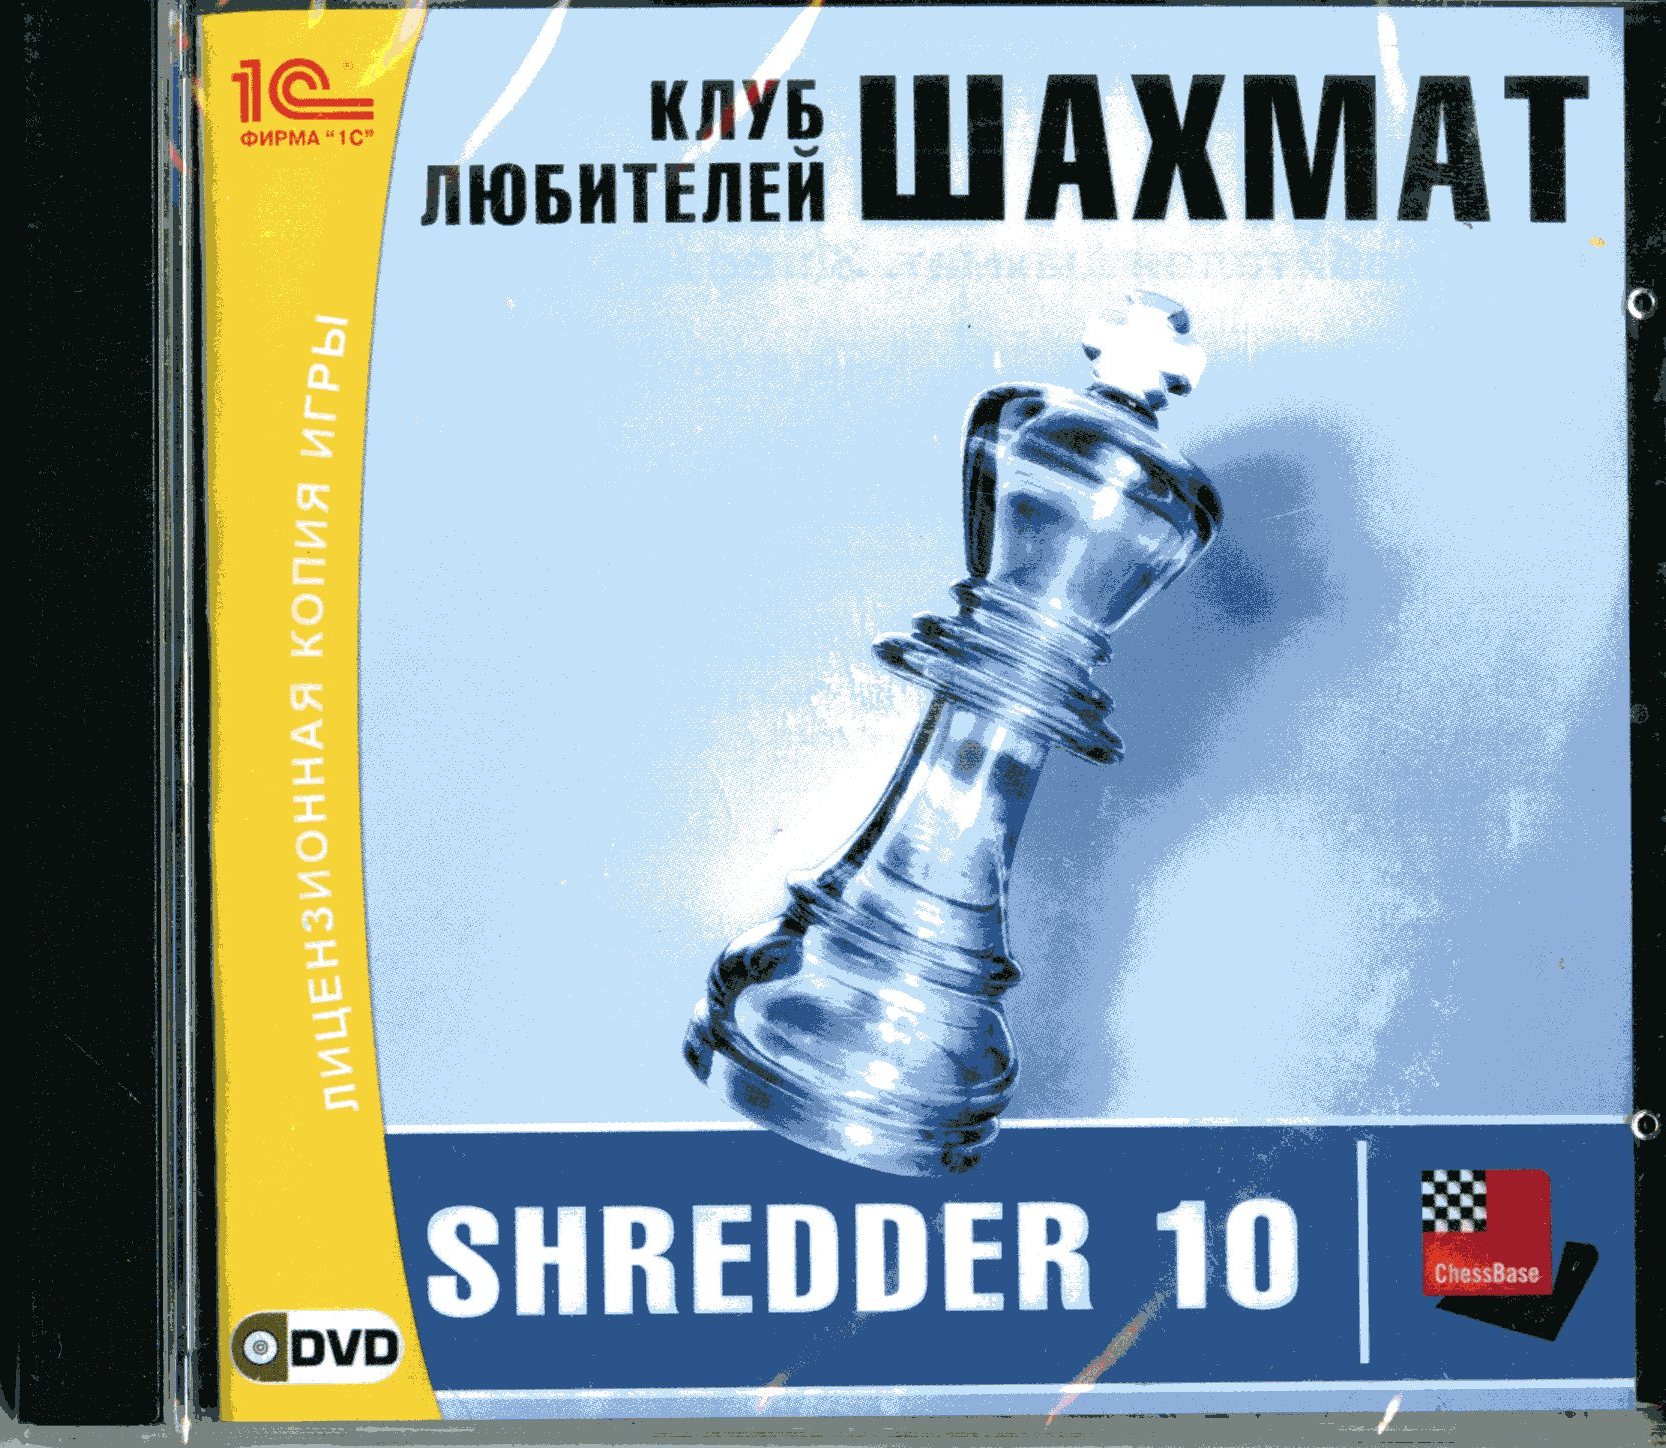 CD Клуб любителей шахмат Shredder 10